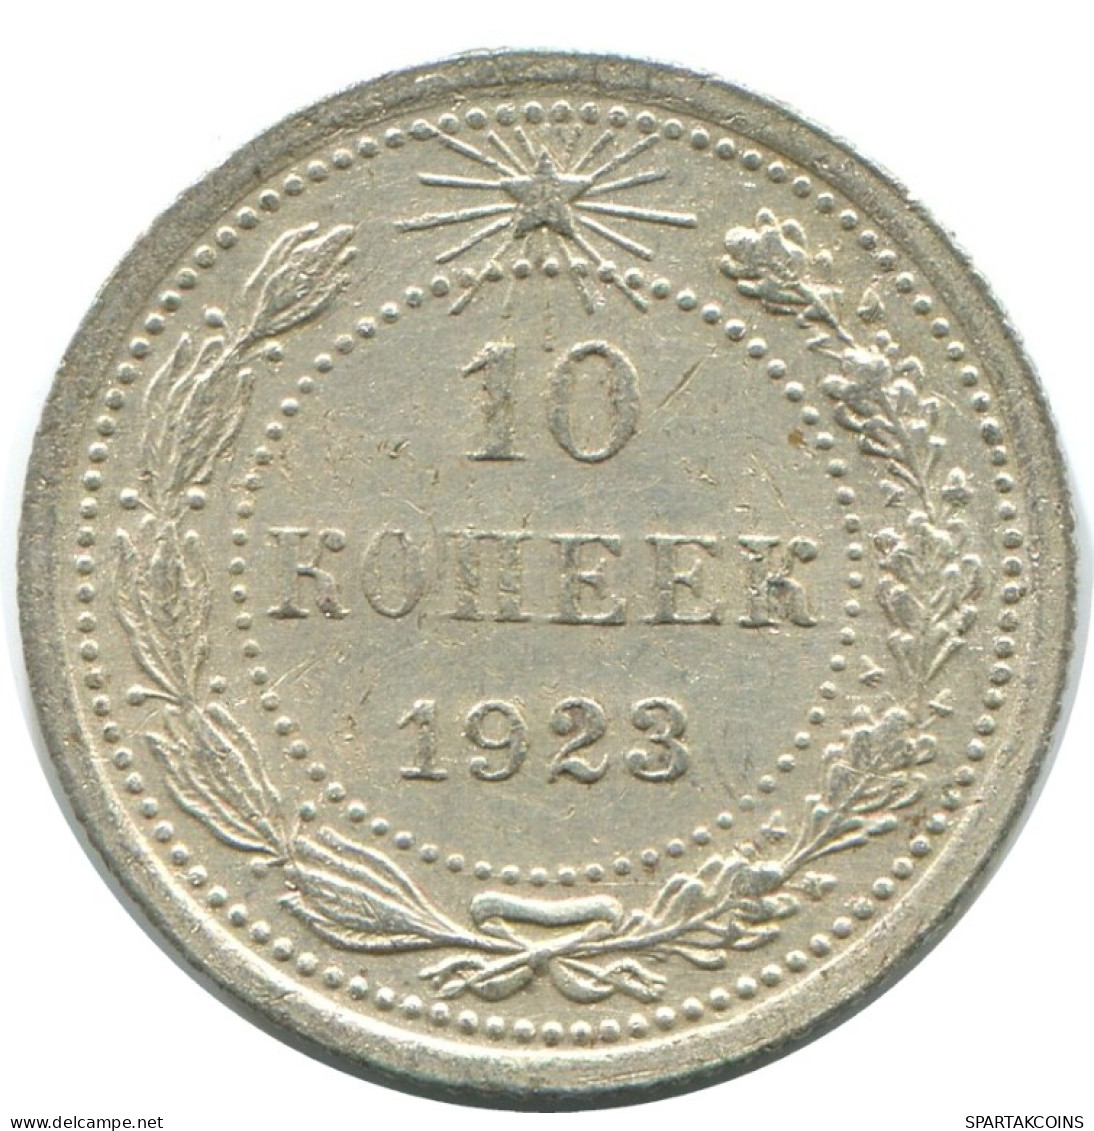 10 KOPEKS 1923 RUSIA RUSSIA RSFSR PLATA Moneda HIGH GRADE #AE900.4.E.A - Russland